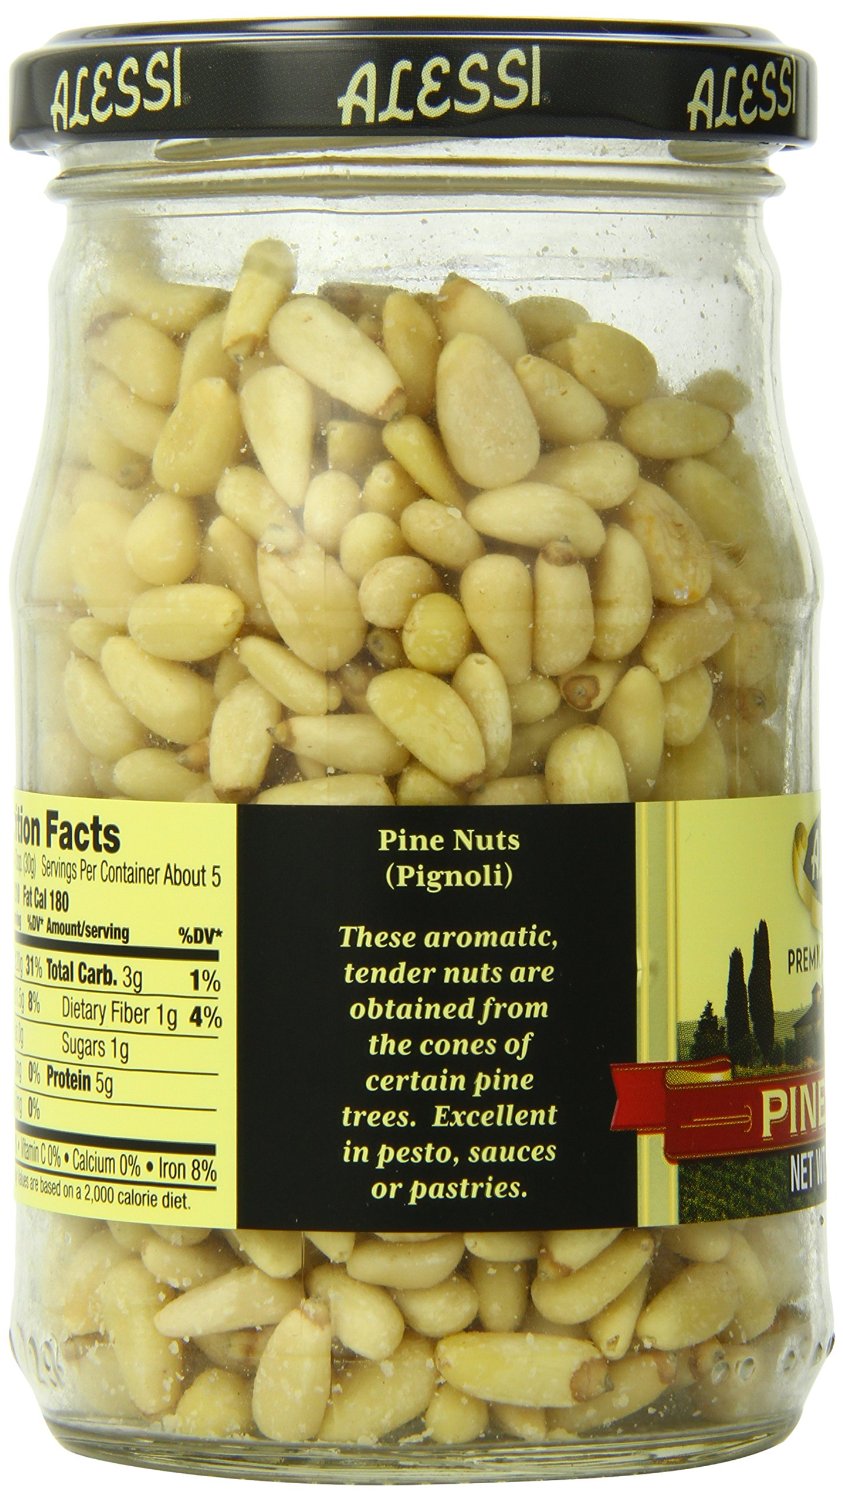 ALESSI: Pignoli Pine Nuts, 5 Oz - 0071072012604